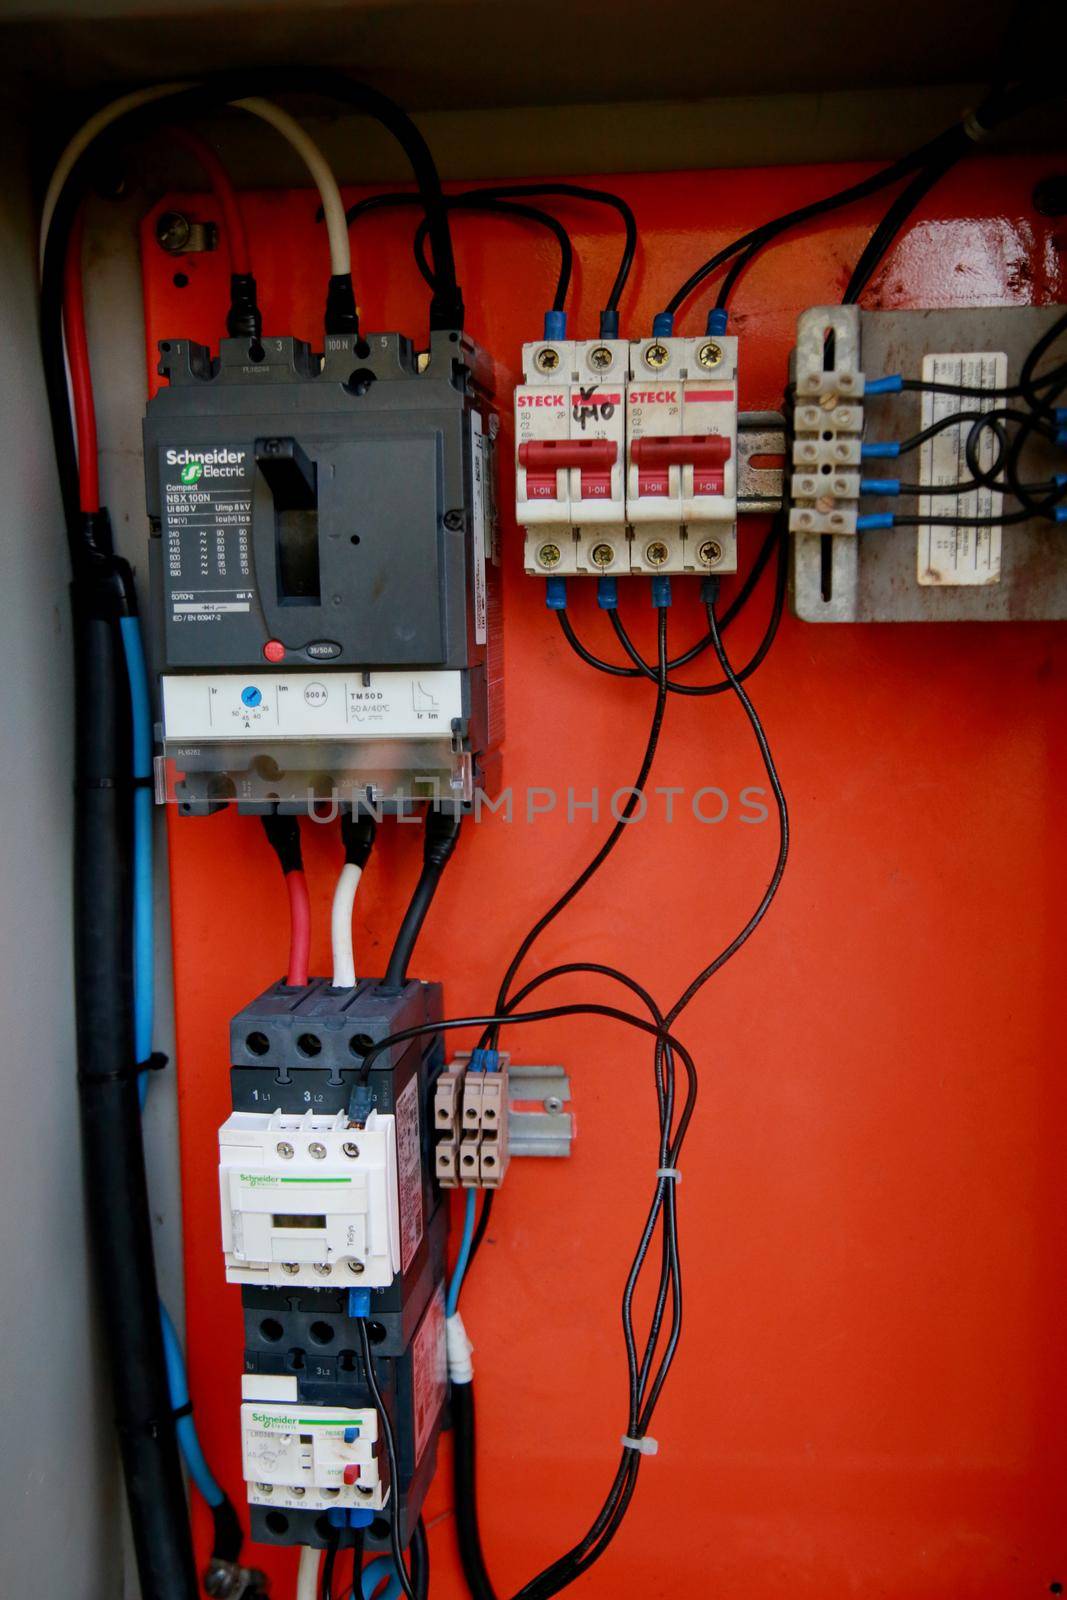 mata de sao joao, bahia / brazil - november 8, 2020: control panel for fuses and electrical breakers at an oil exploration station in the city of Mata de Sao Joao.